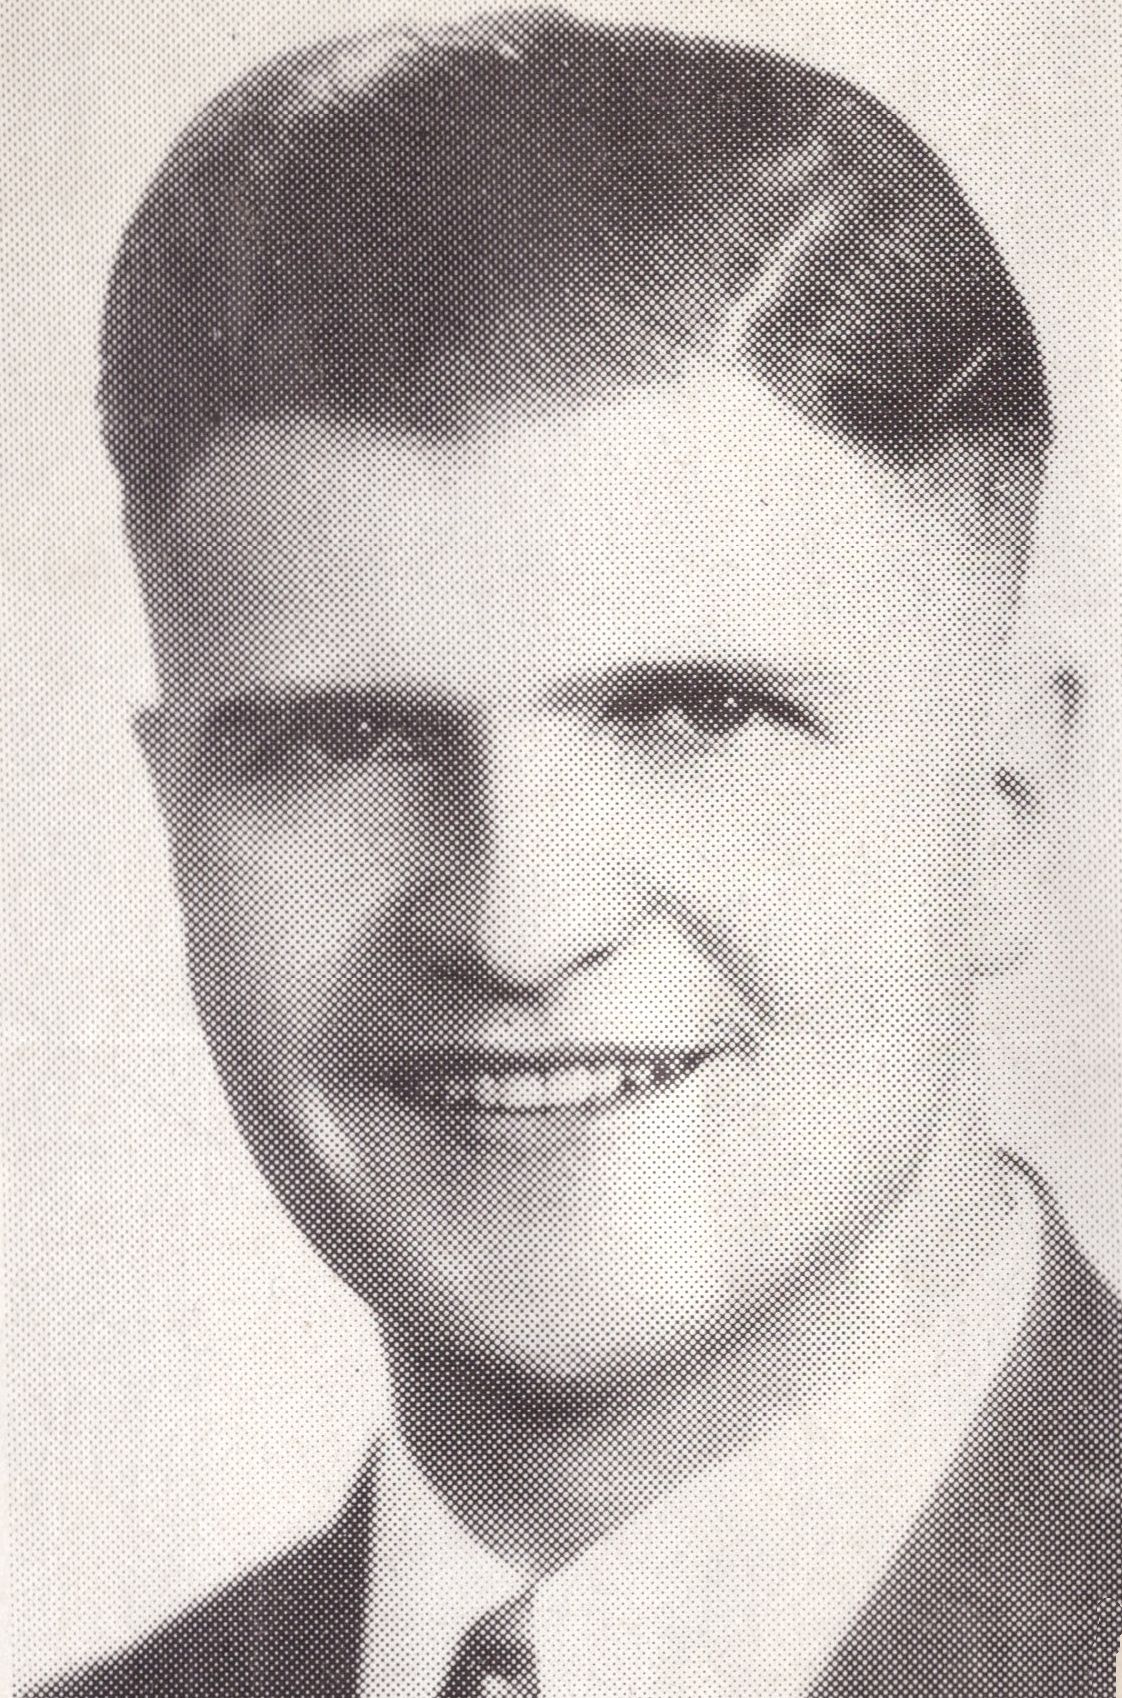 Kenneth William Harrison (1916 - 1977) Profile